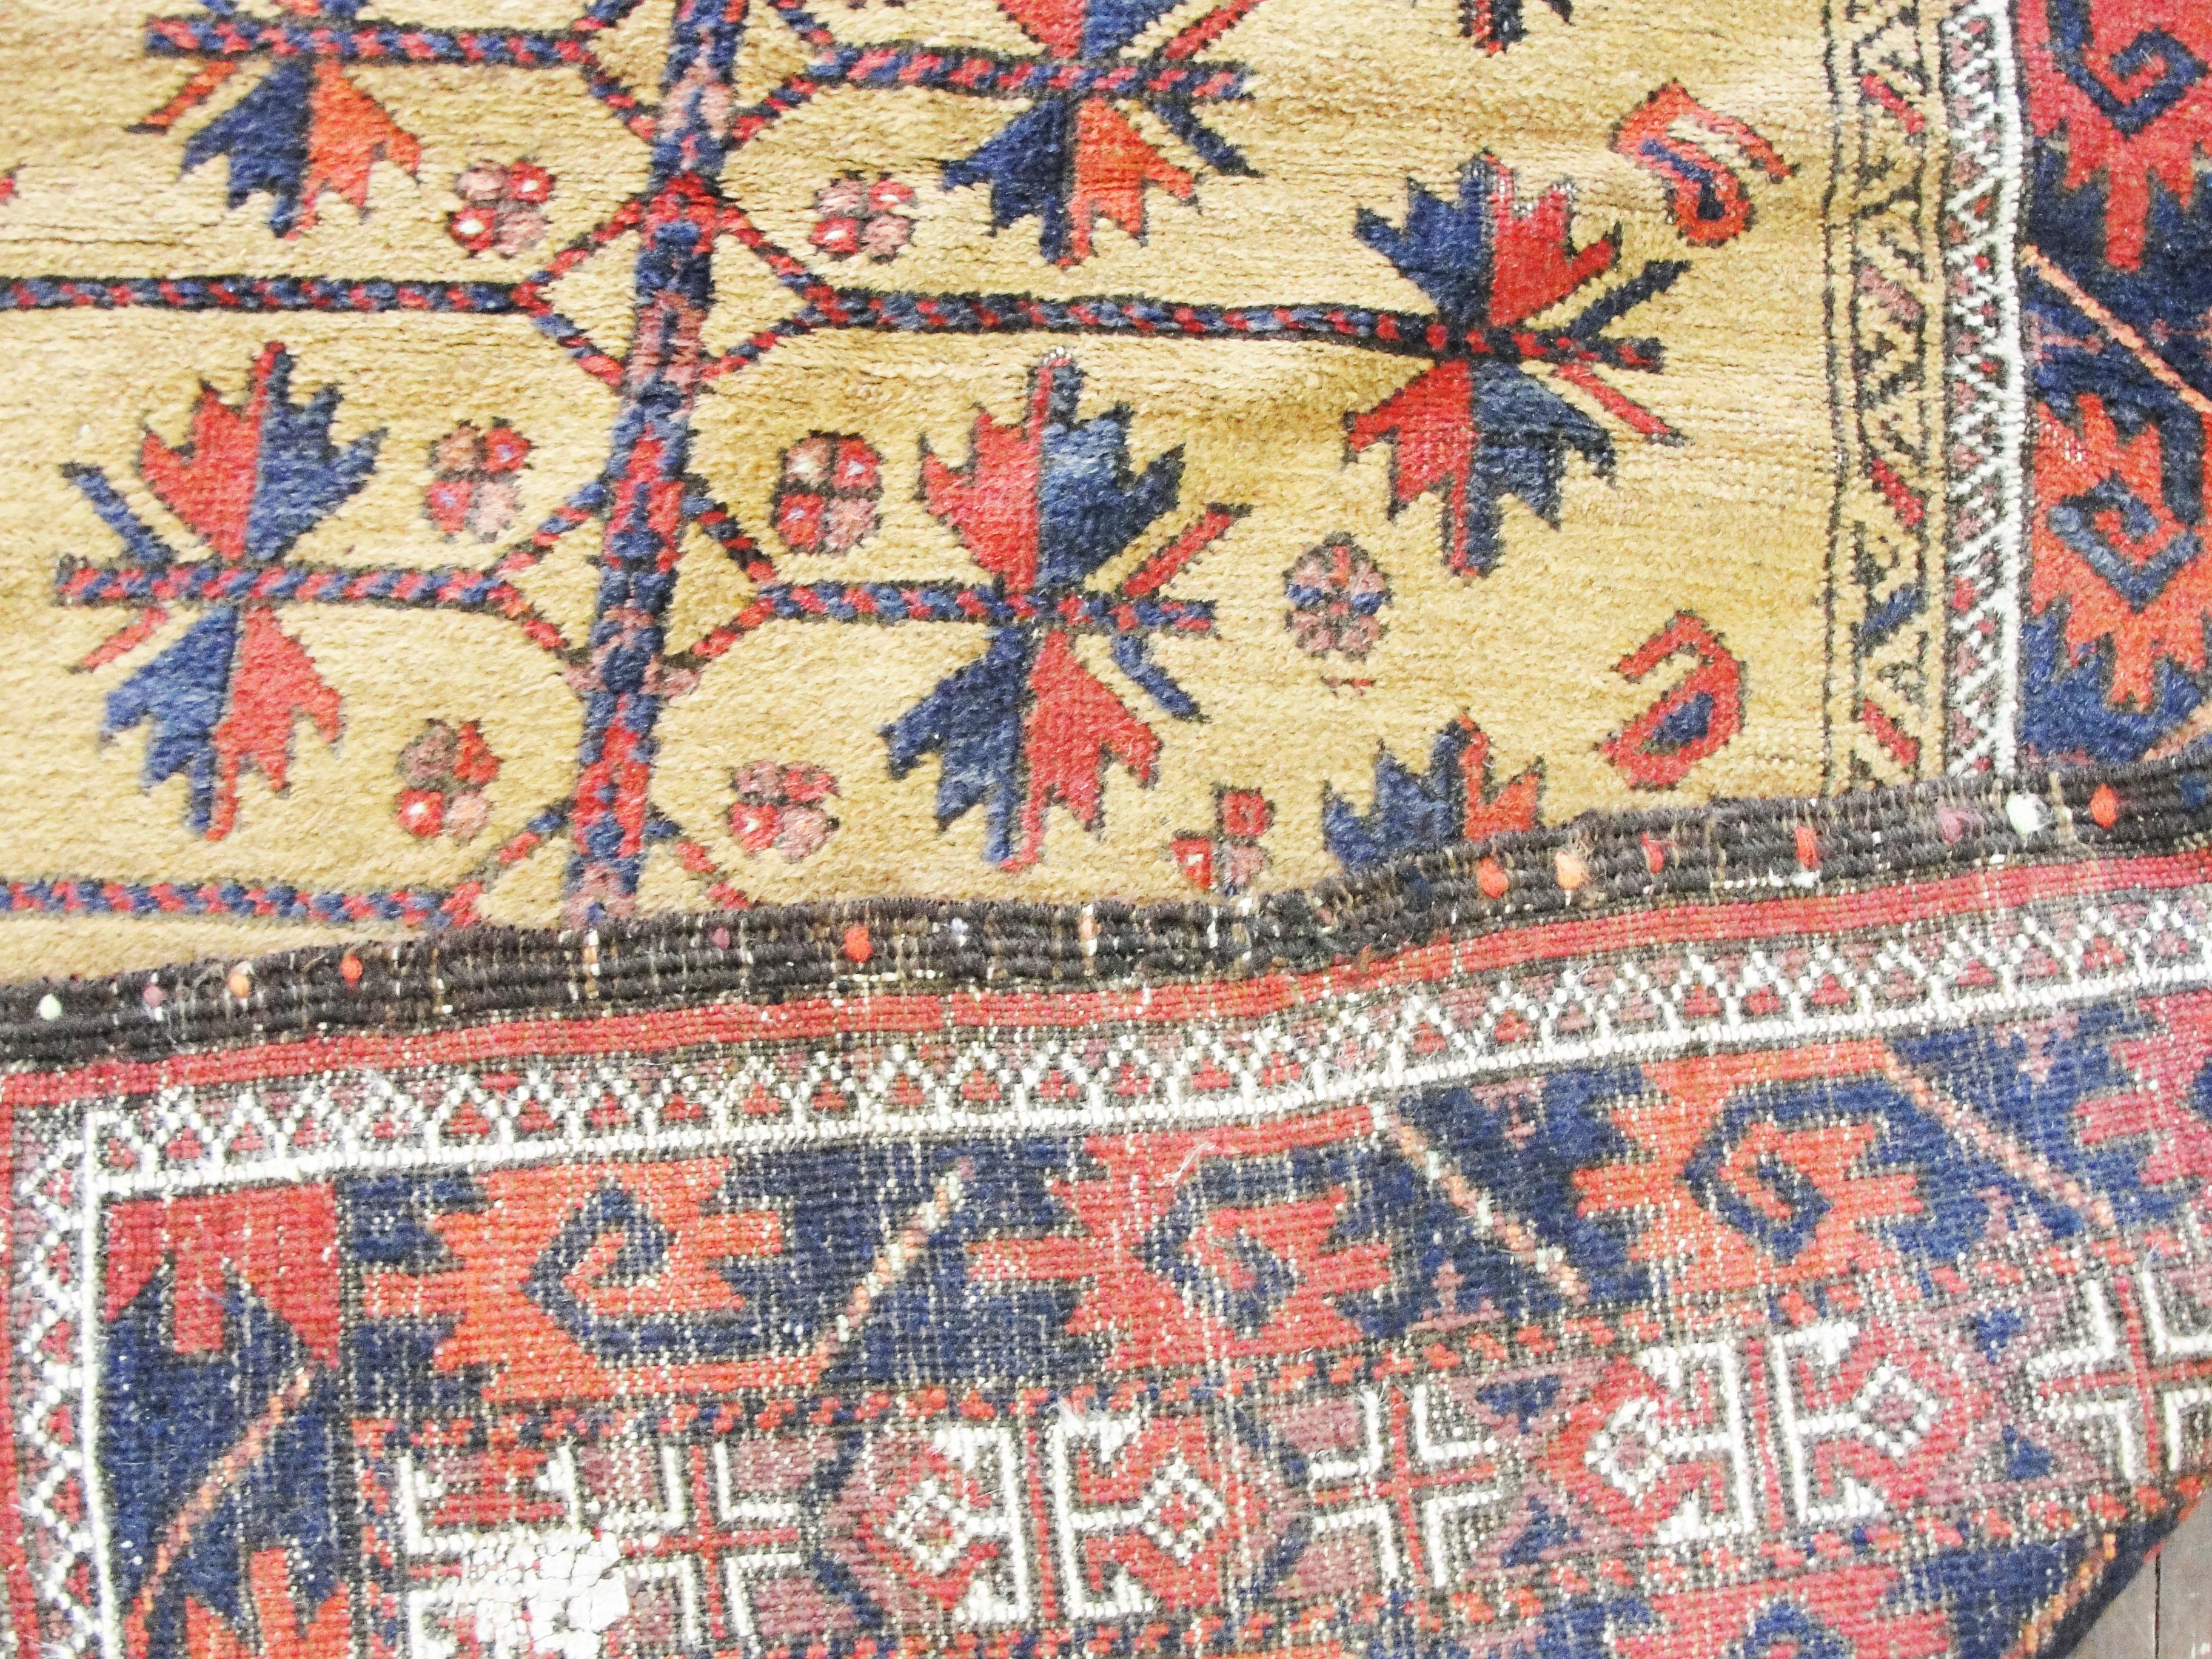 Central Asian Antique Belouch Prayer Rug